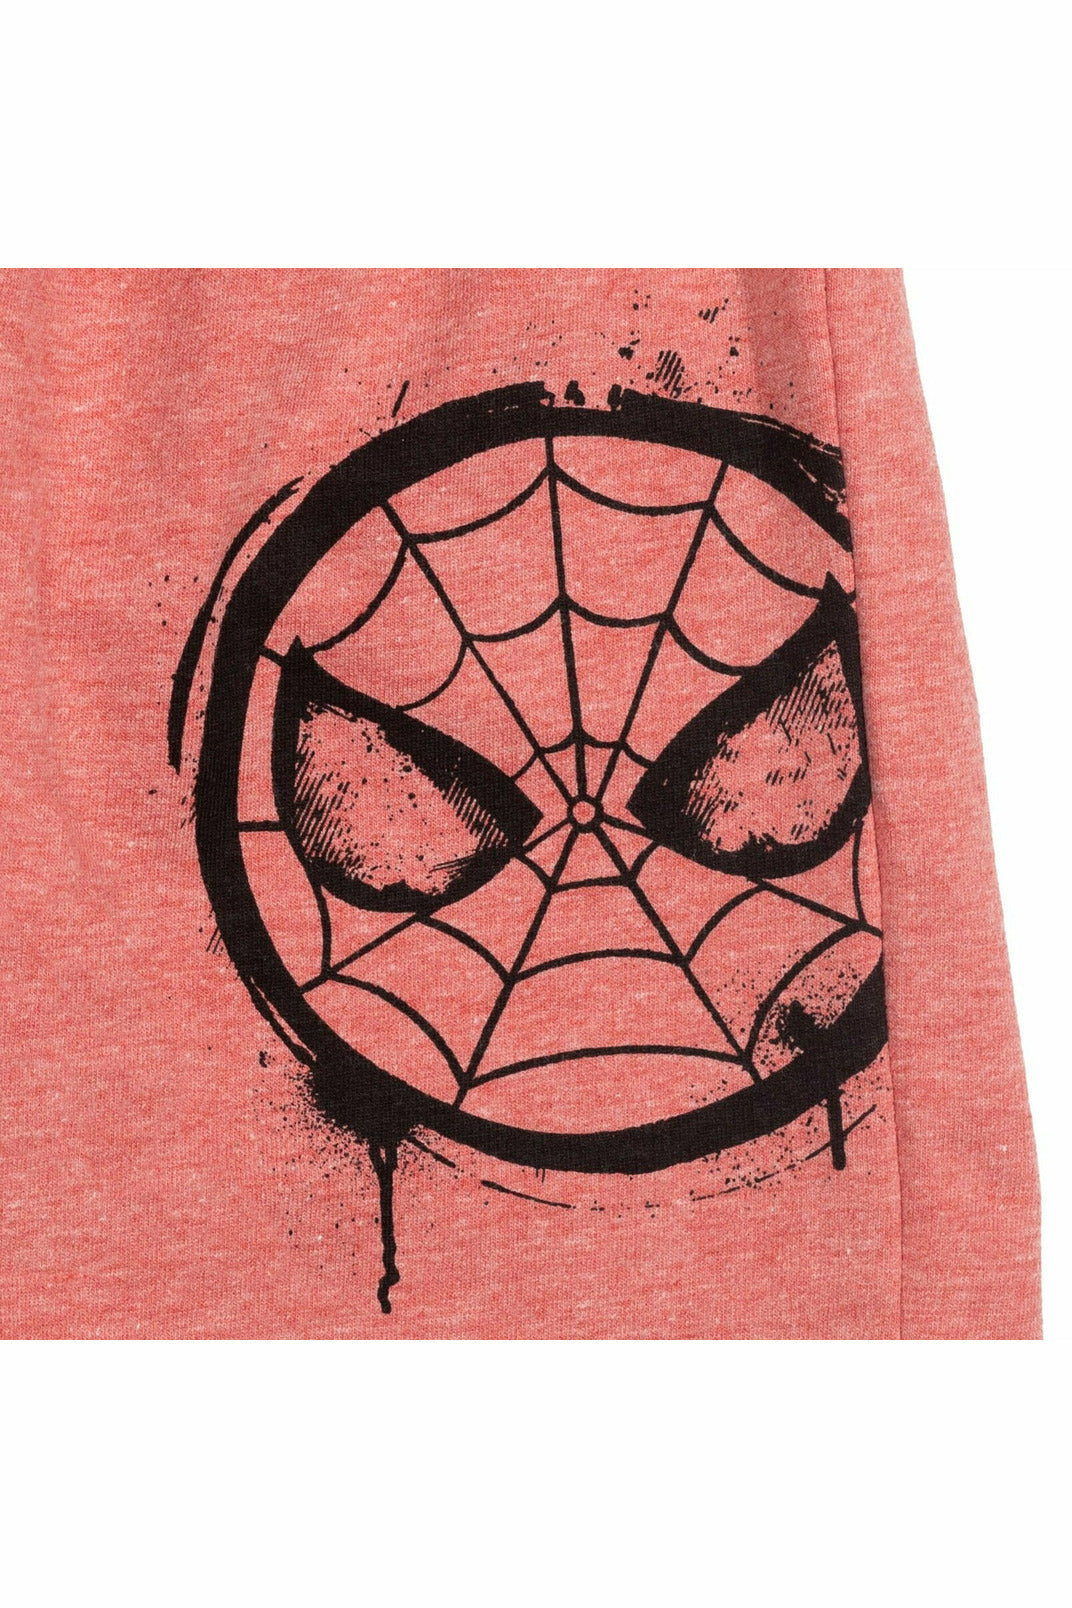 Spider-Man Avengers 2 Pack Shorts